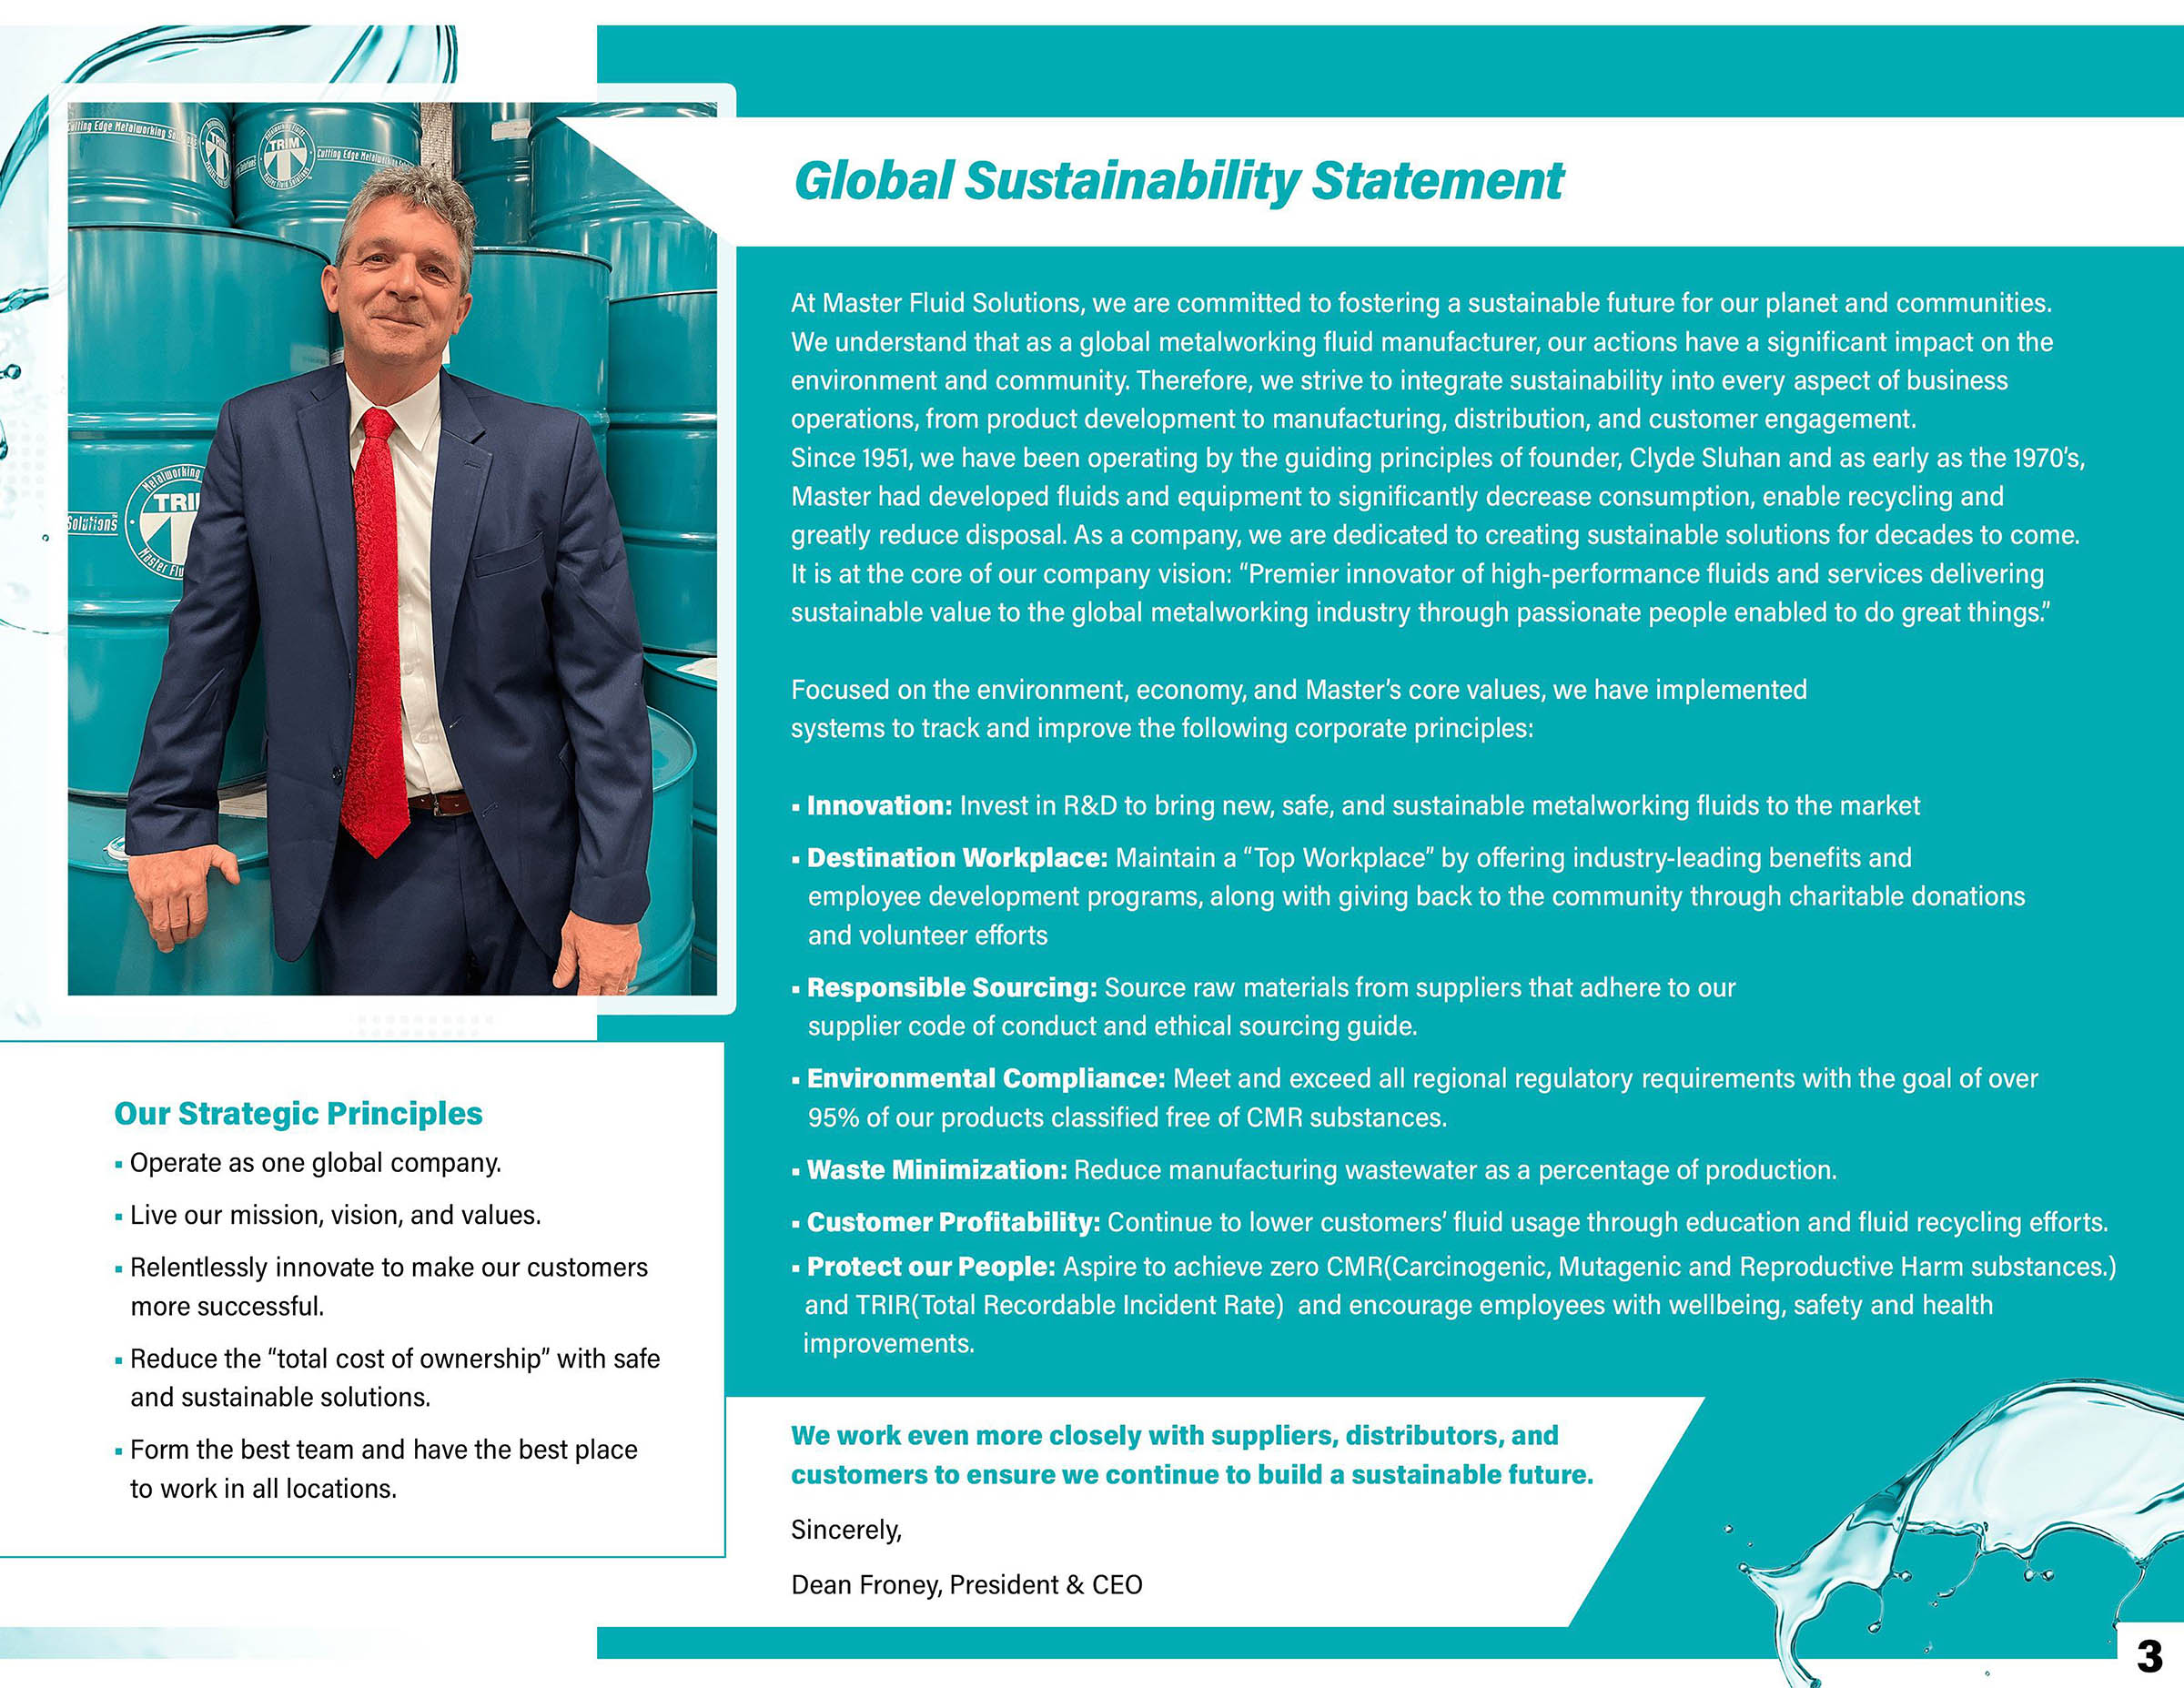 Sustainability Report - Global Sustainability Statement